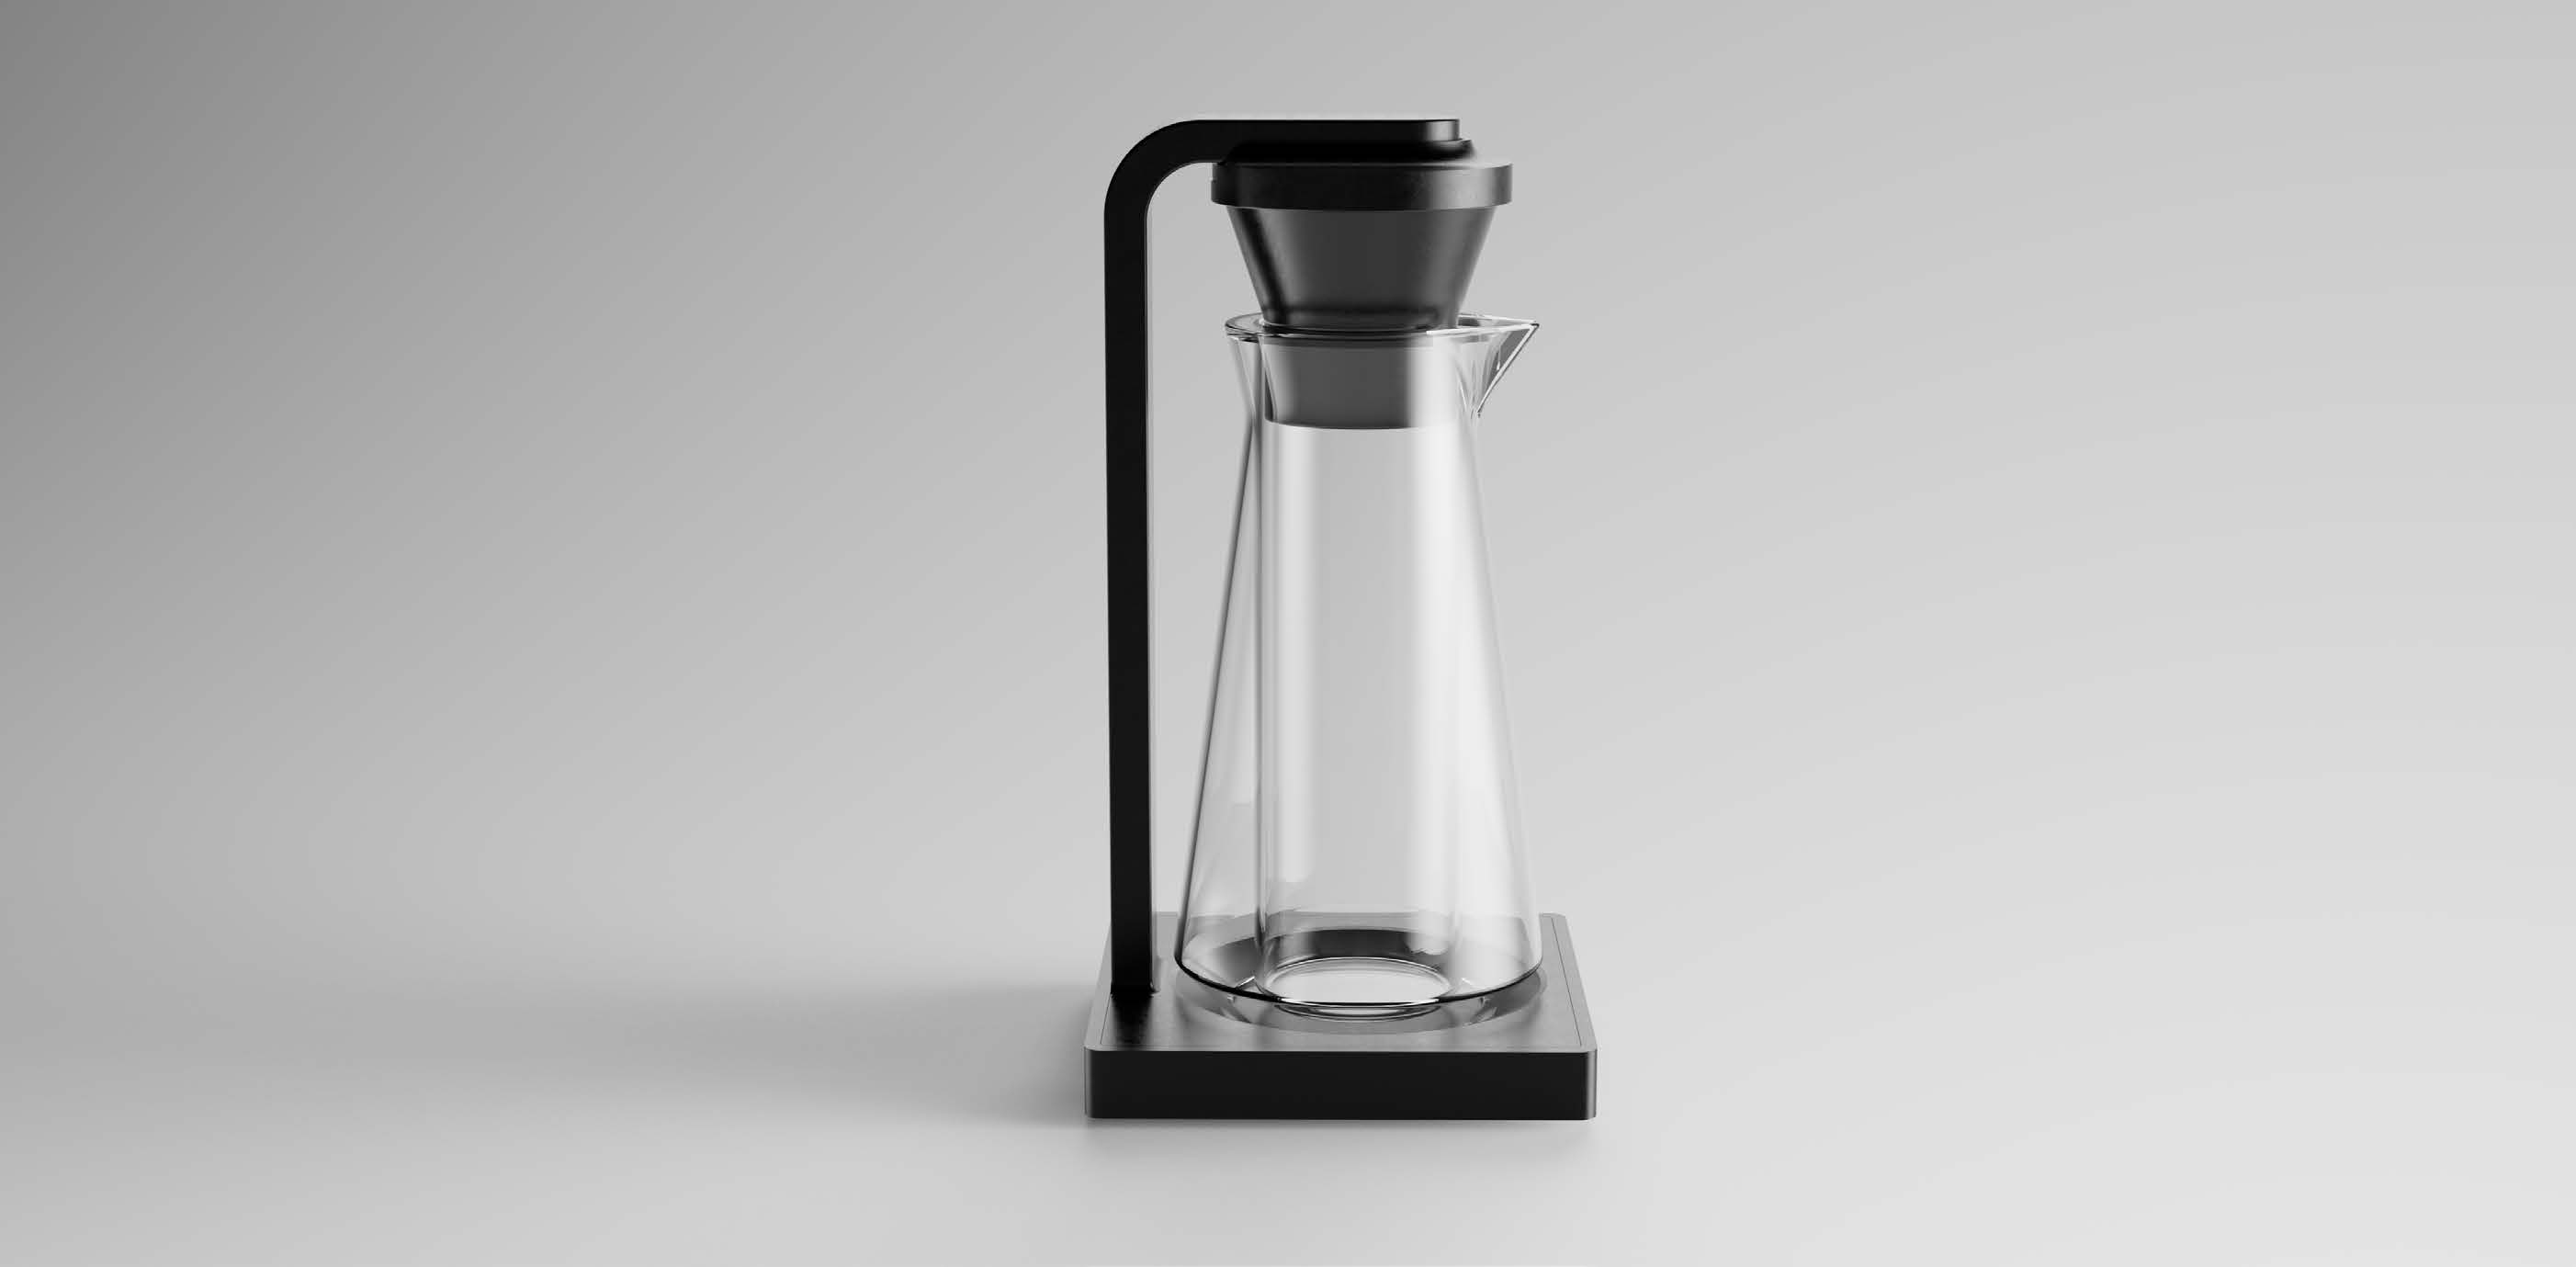 Horizon - Coffee maker